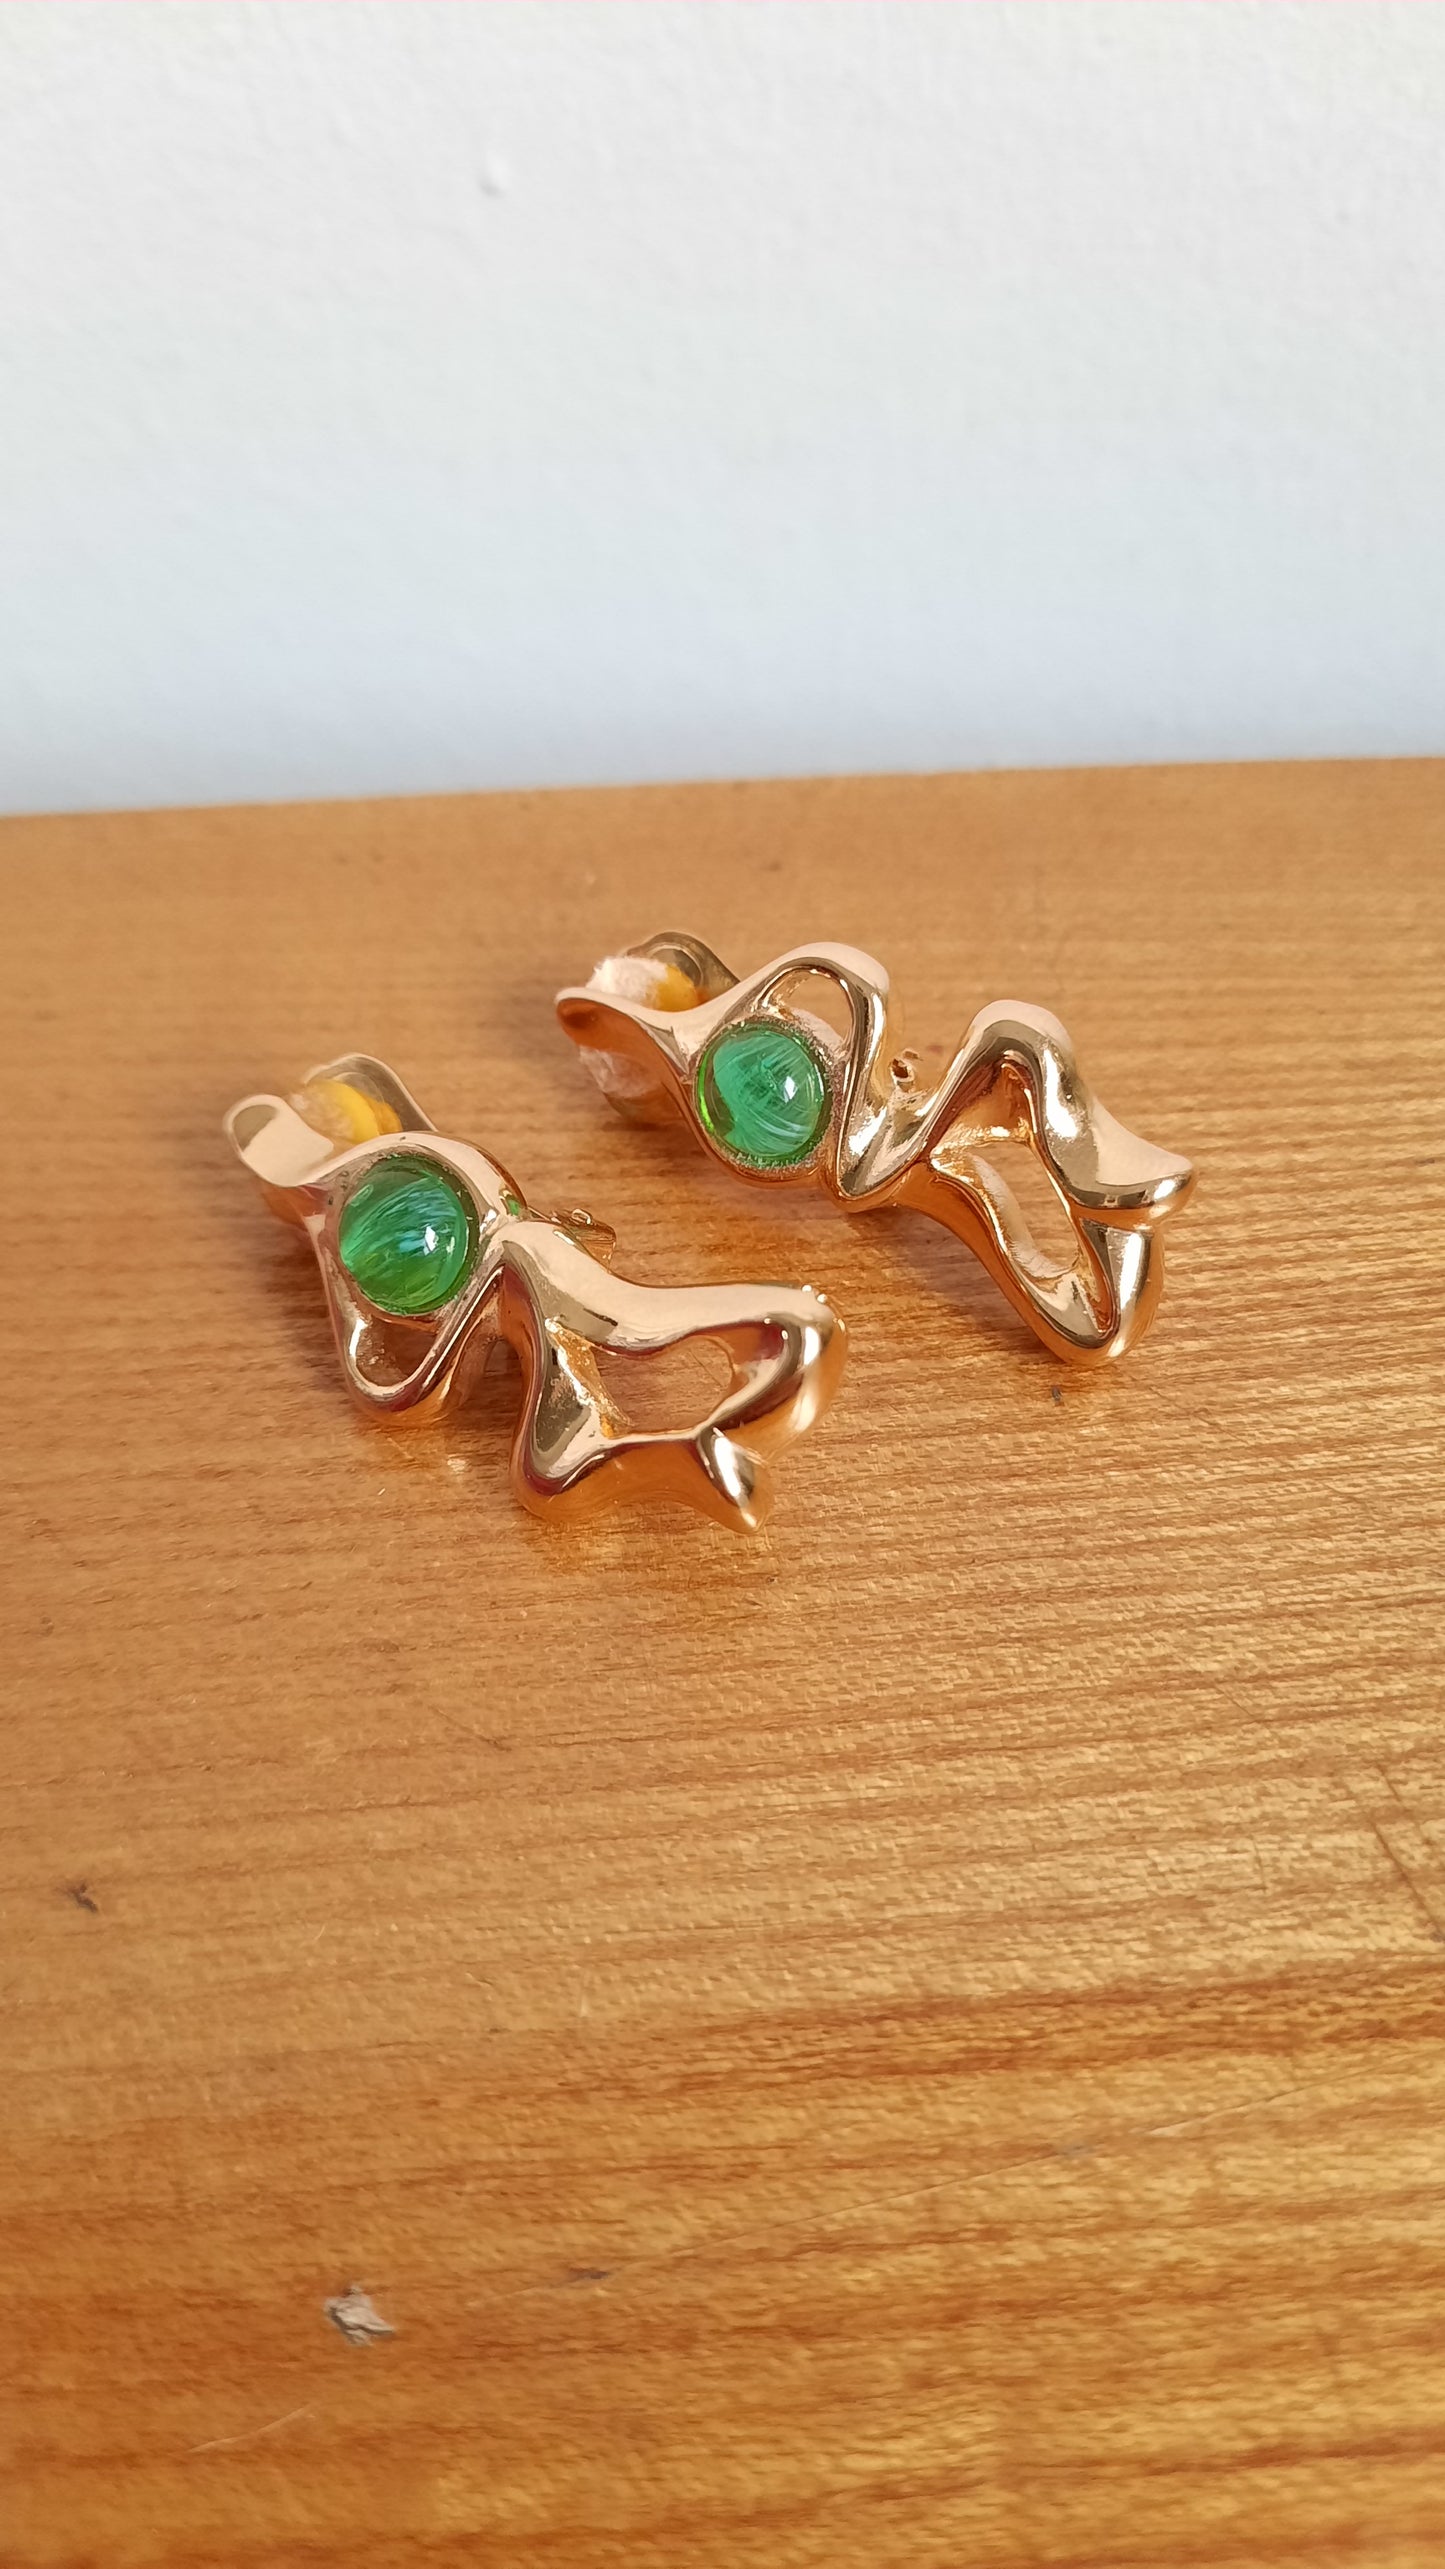 Vintage Gold & Green Art Earrings